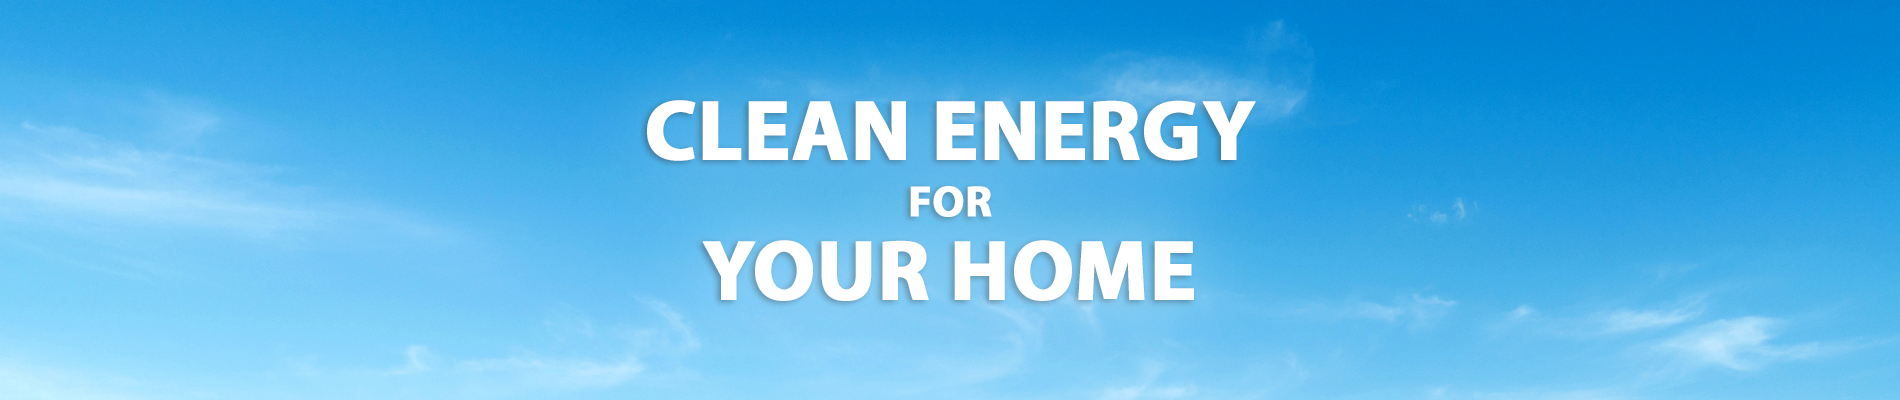 Clean-Energy-Banner_1900x400_1